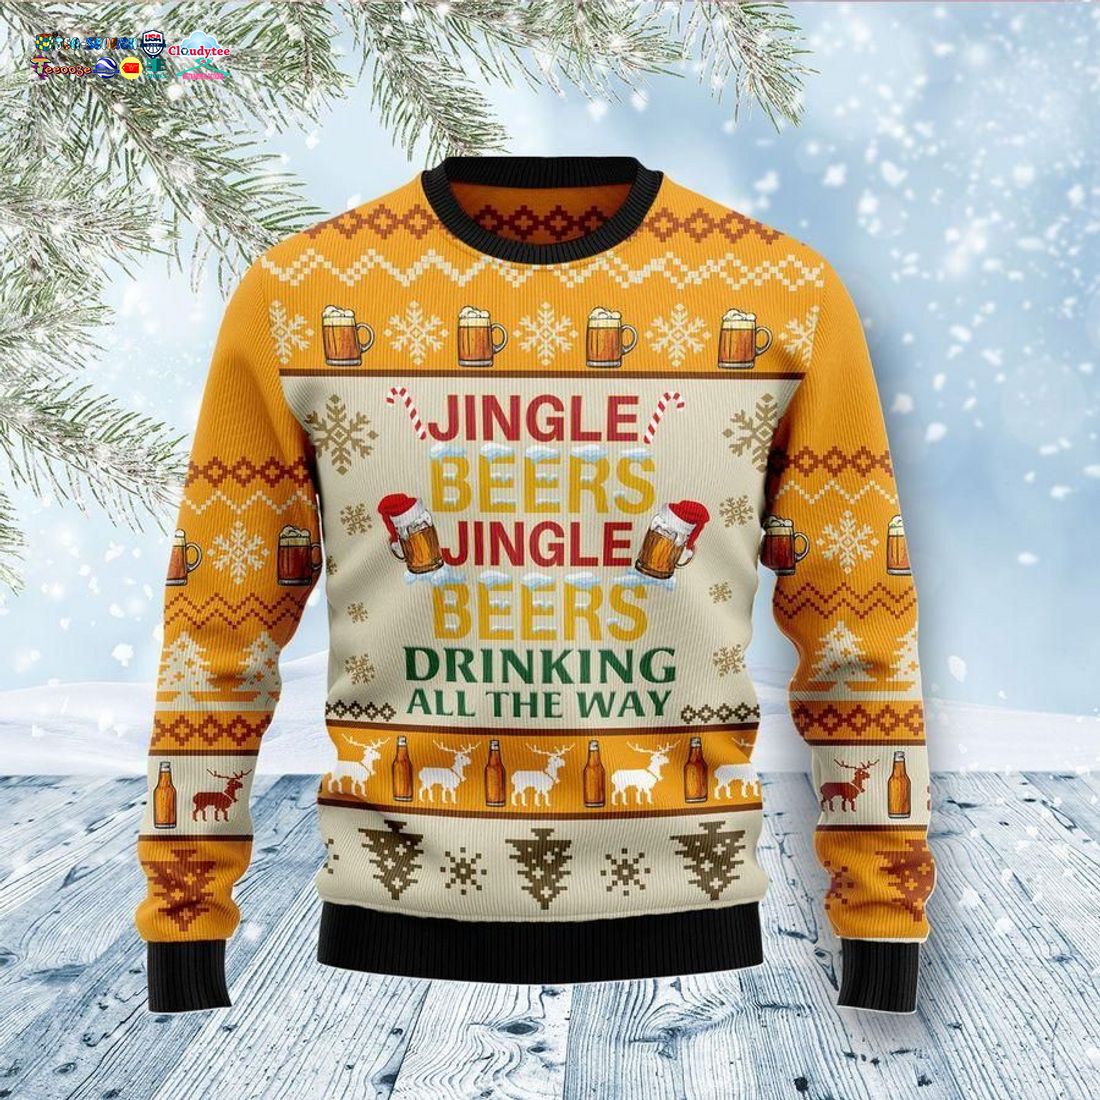 jingle-beers-jingle-beers-drinking-all-the-way-ver-2-ugly-christmas-sweater-1-jb1gX.jpg